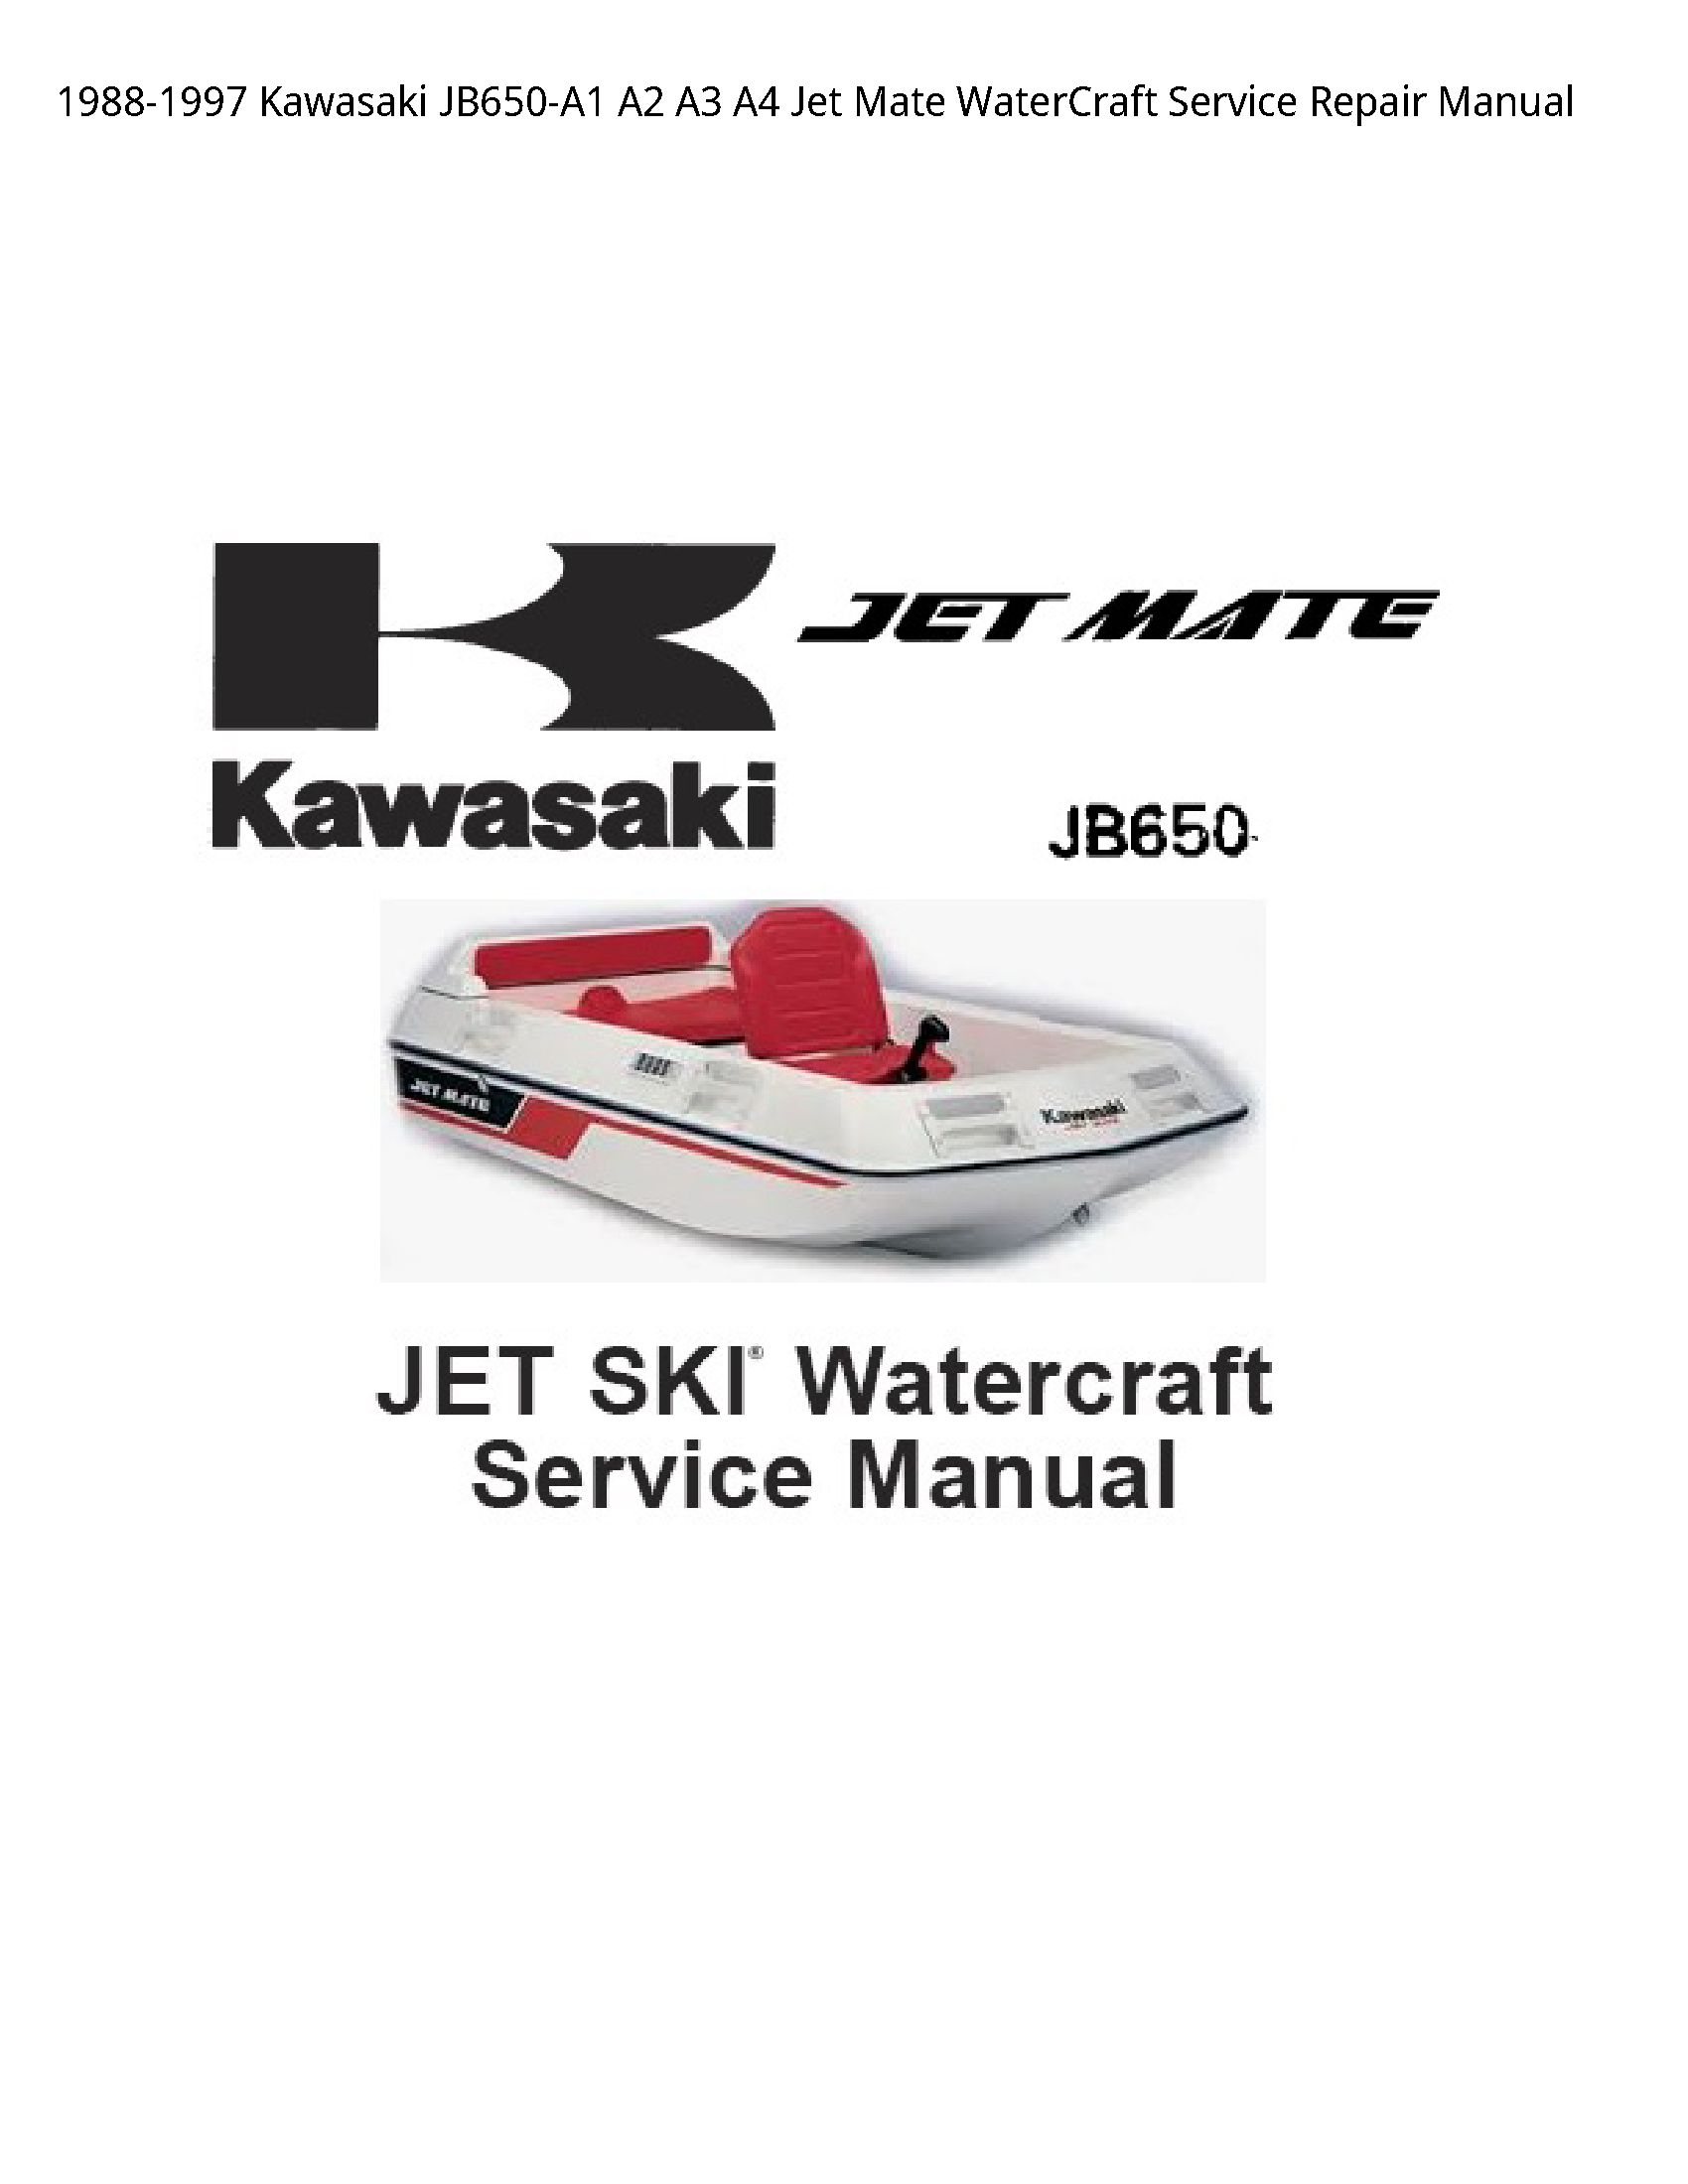 Kawasaki JB650-A1 Jet Mate WaterCraft manual